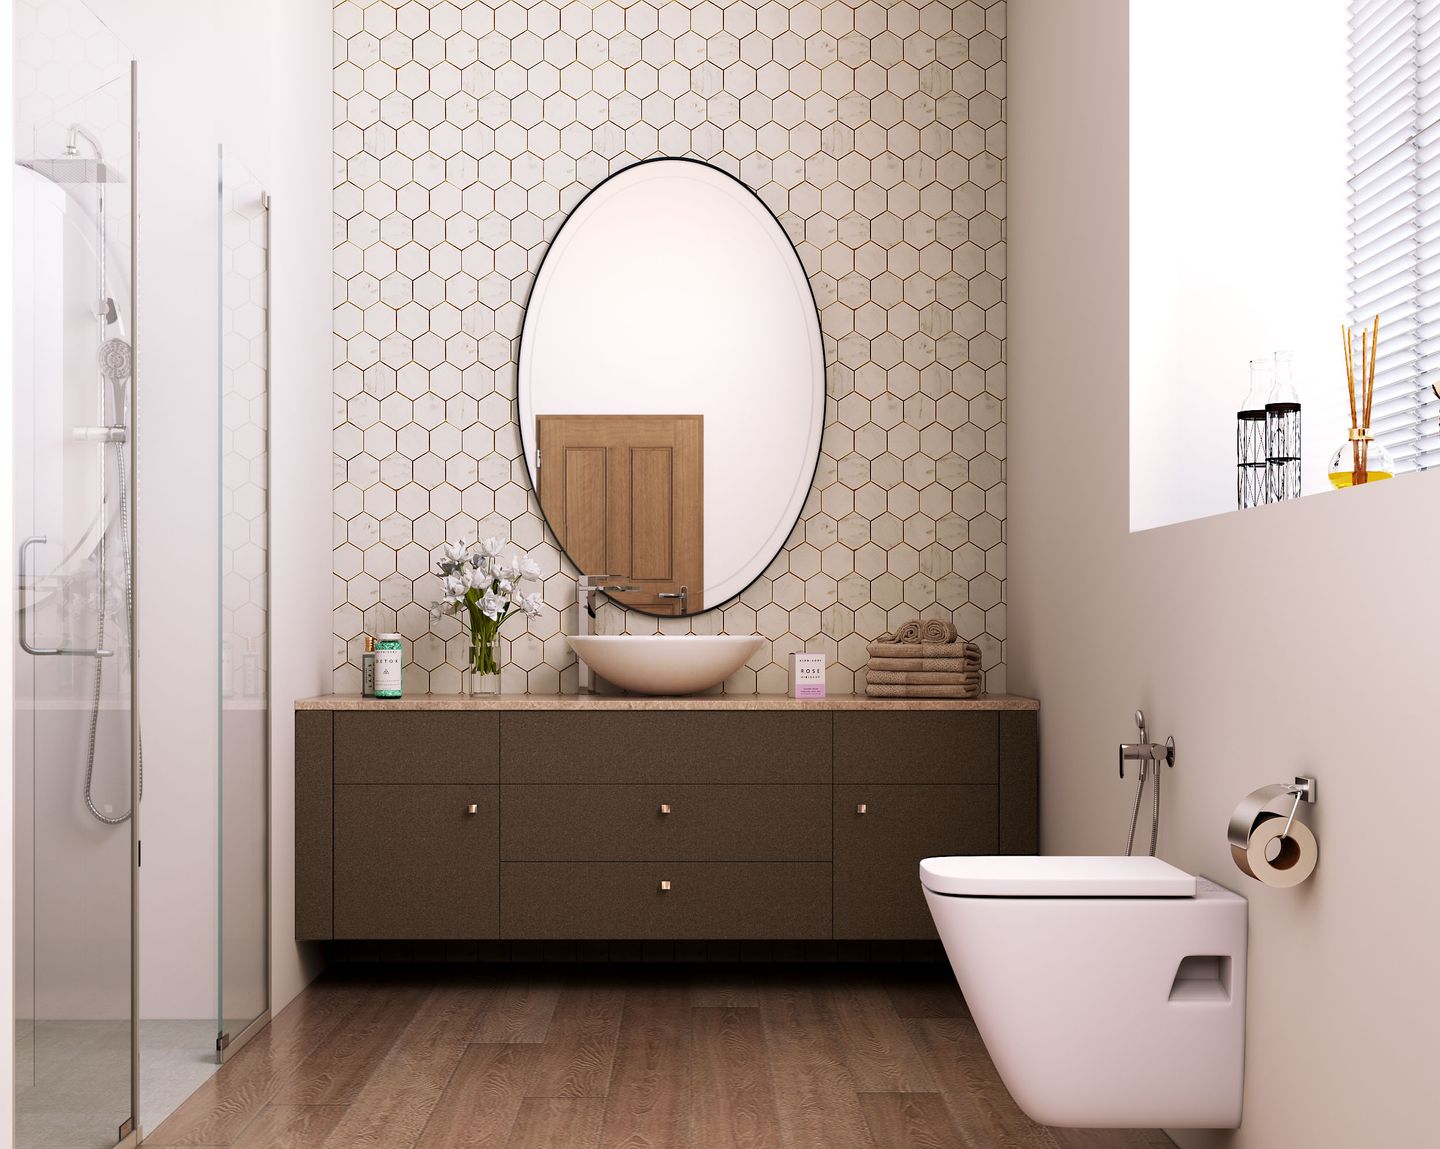 Matte Hexagonal Bathroom Tile Design In Cream - Livspace